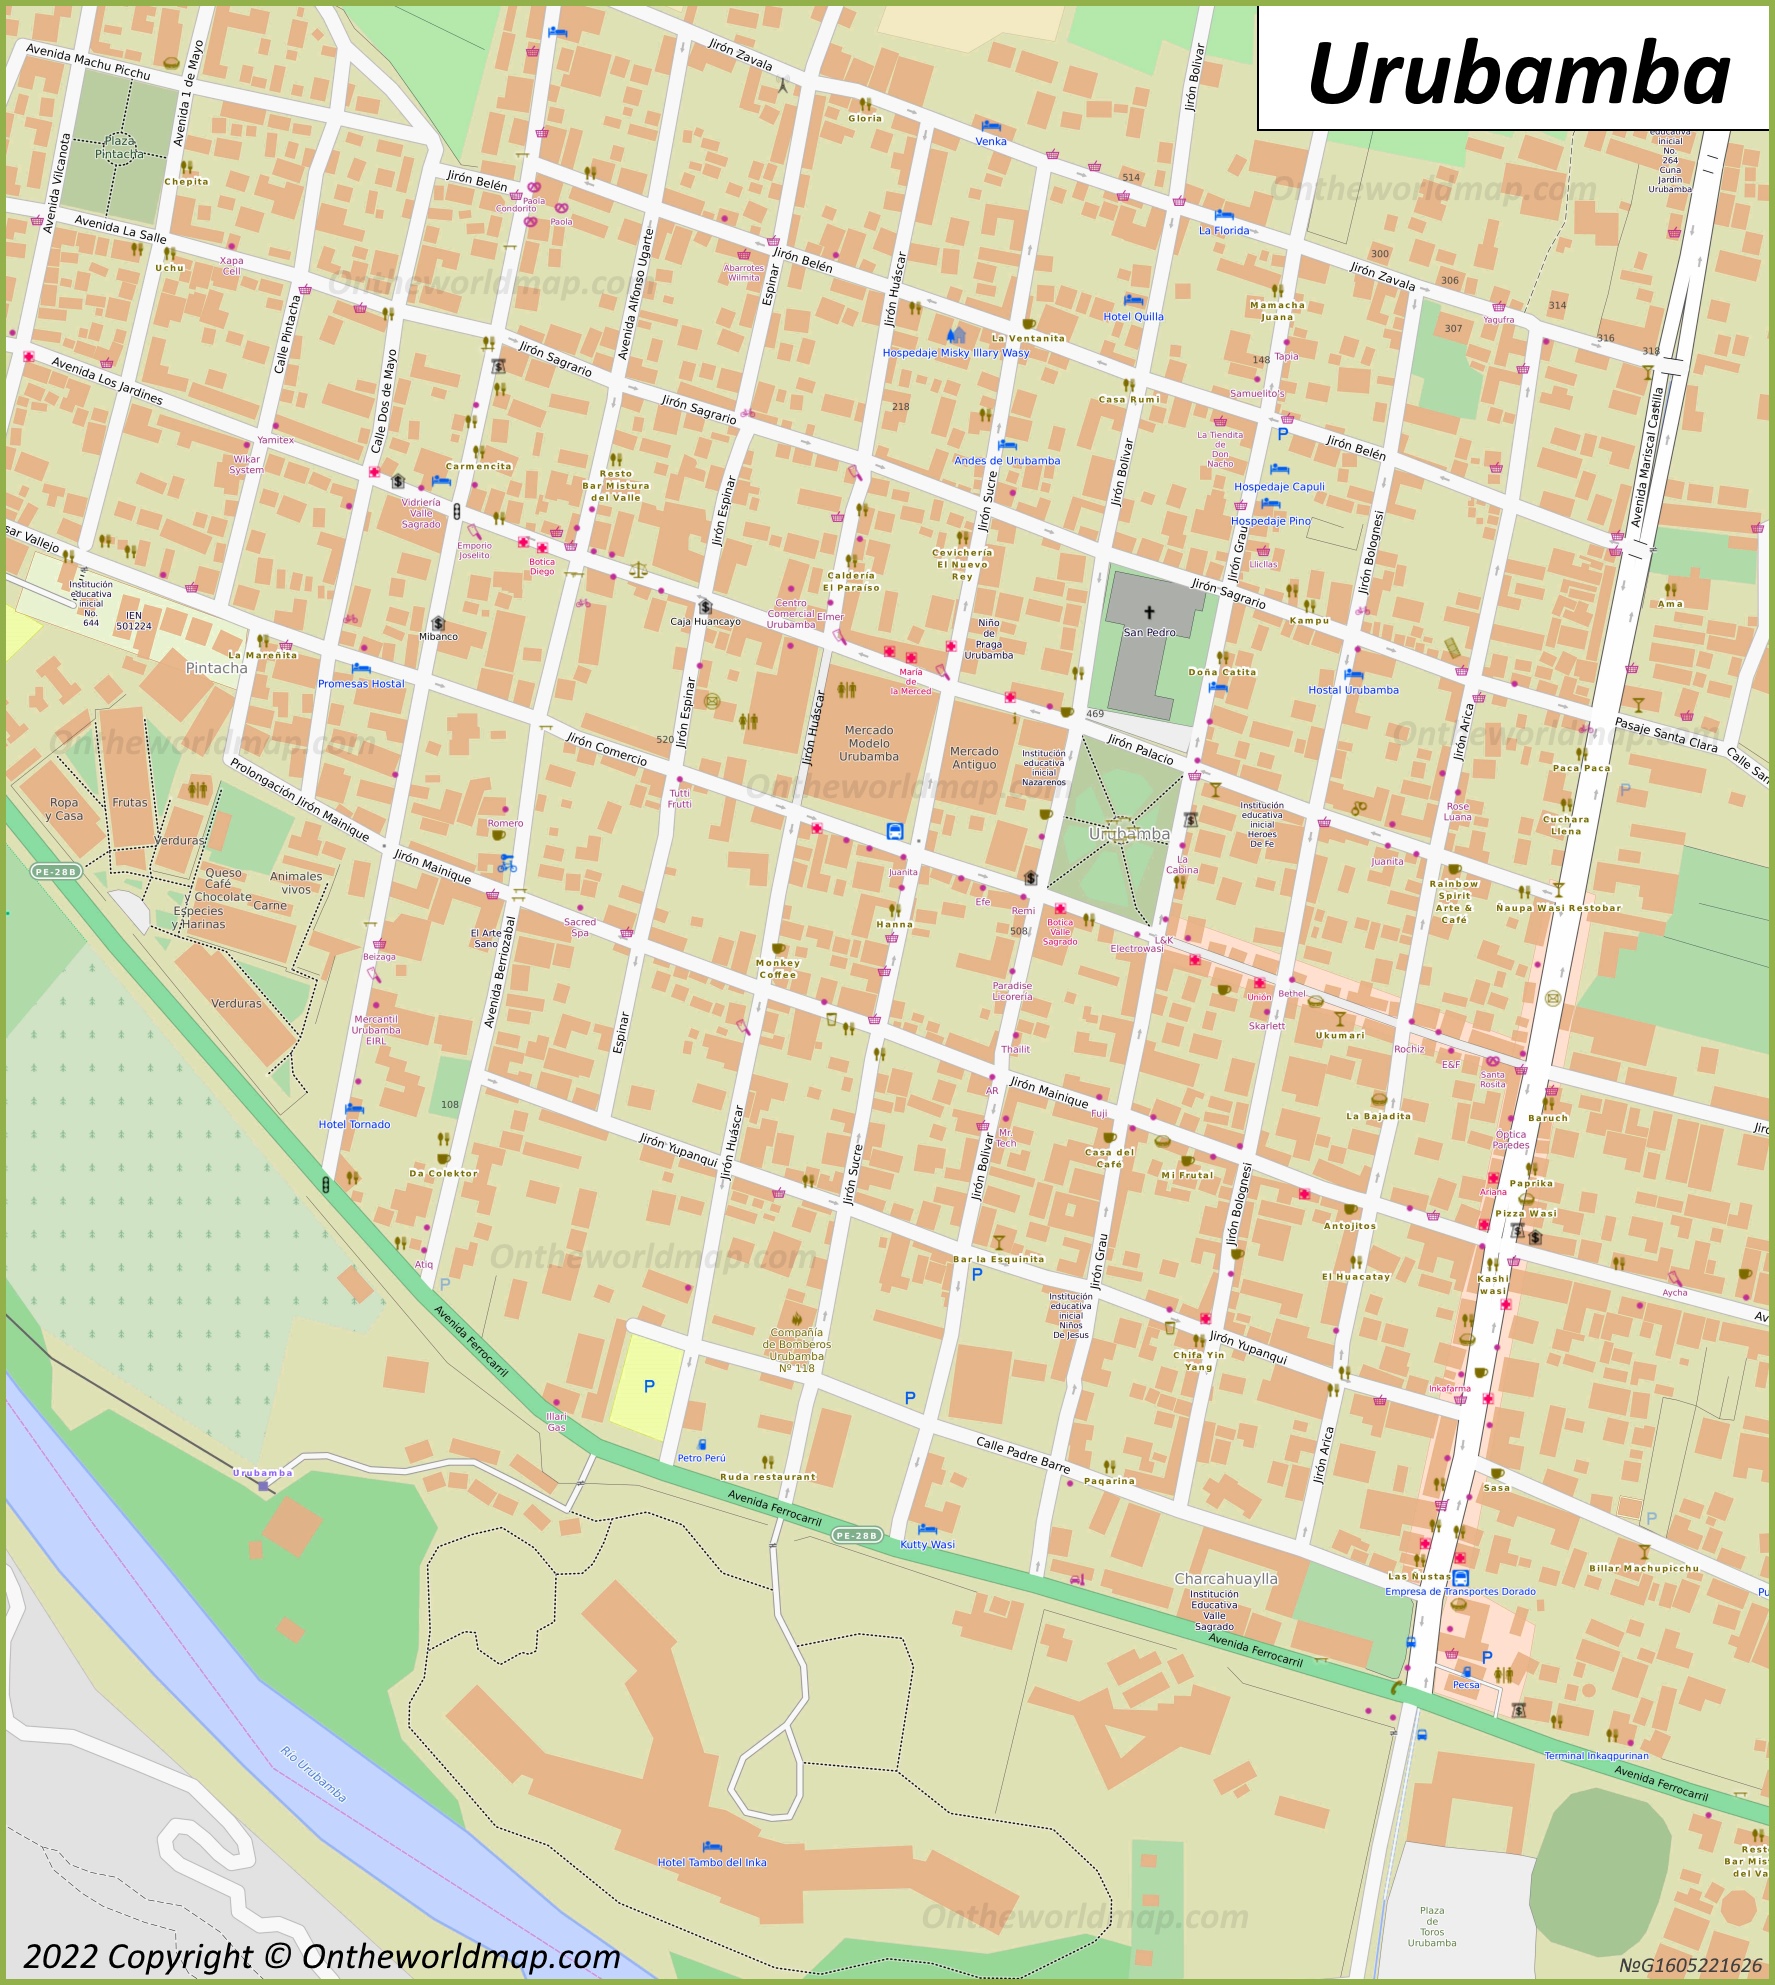 Urubamba - Mapa del centro